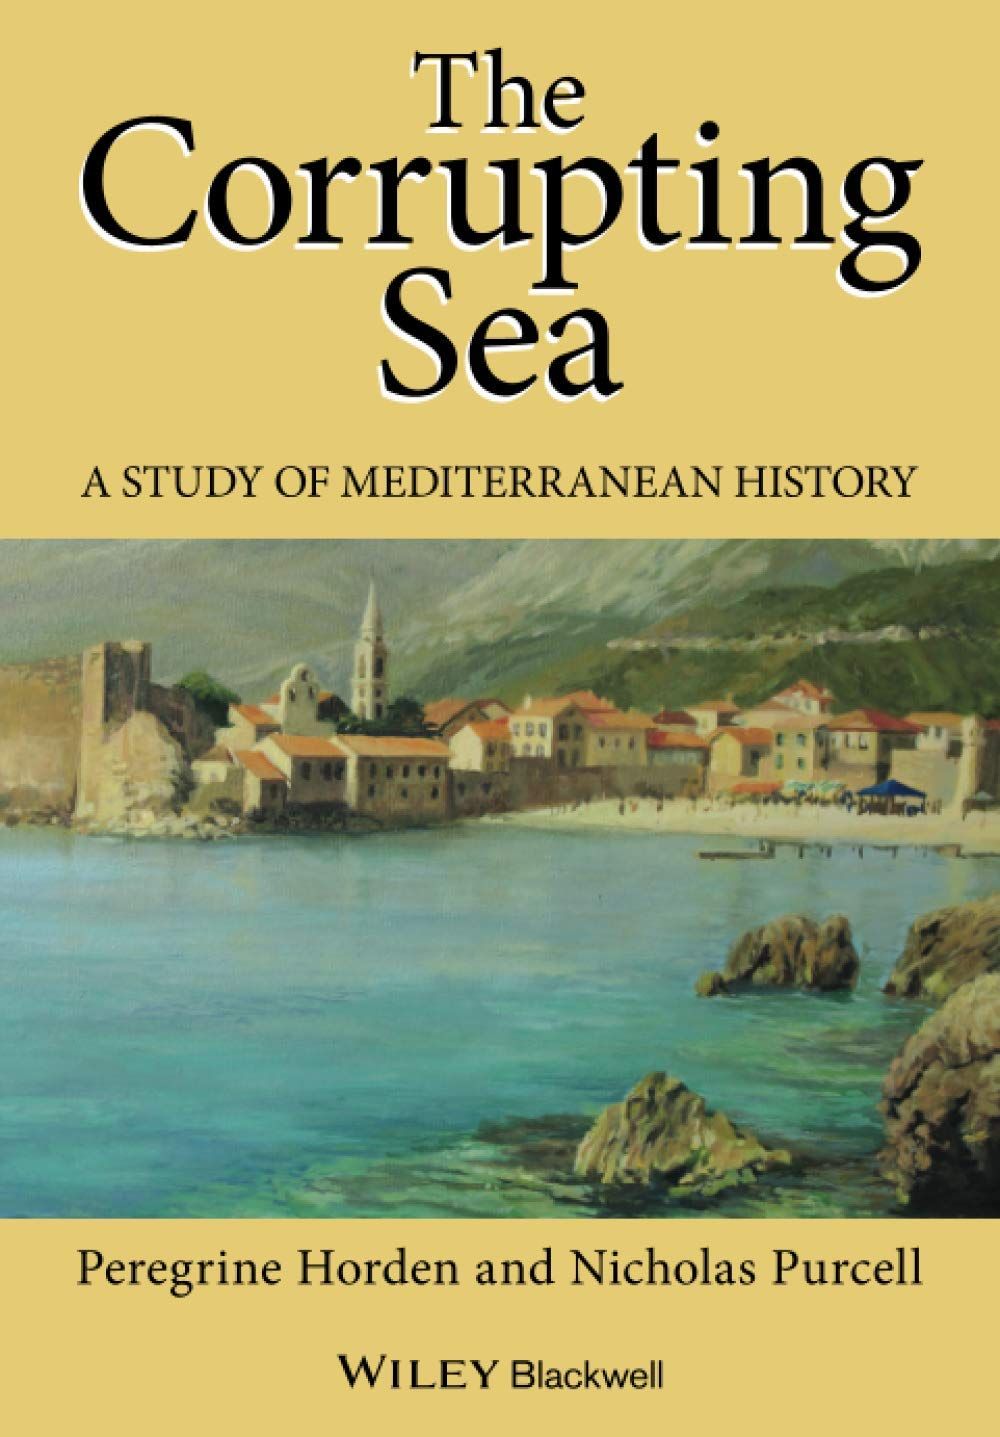 The Corrupting Sea cover